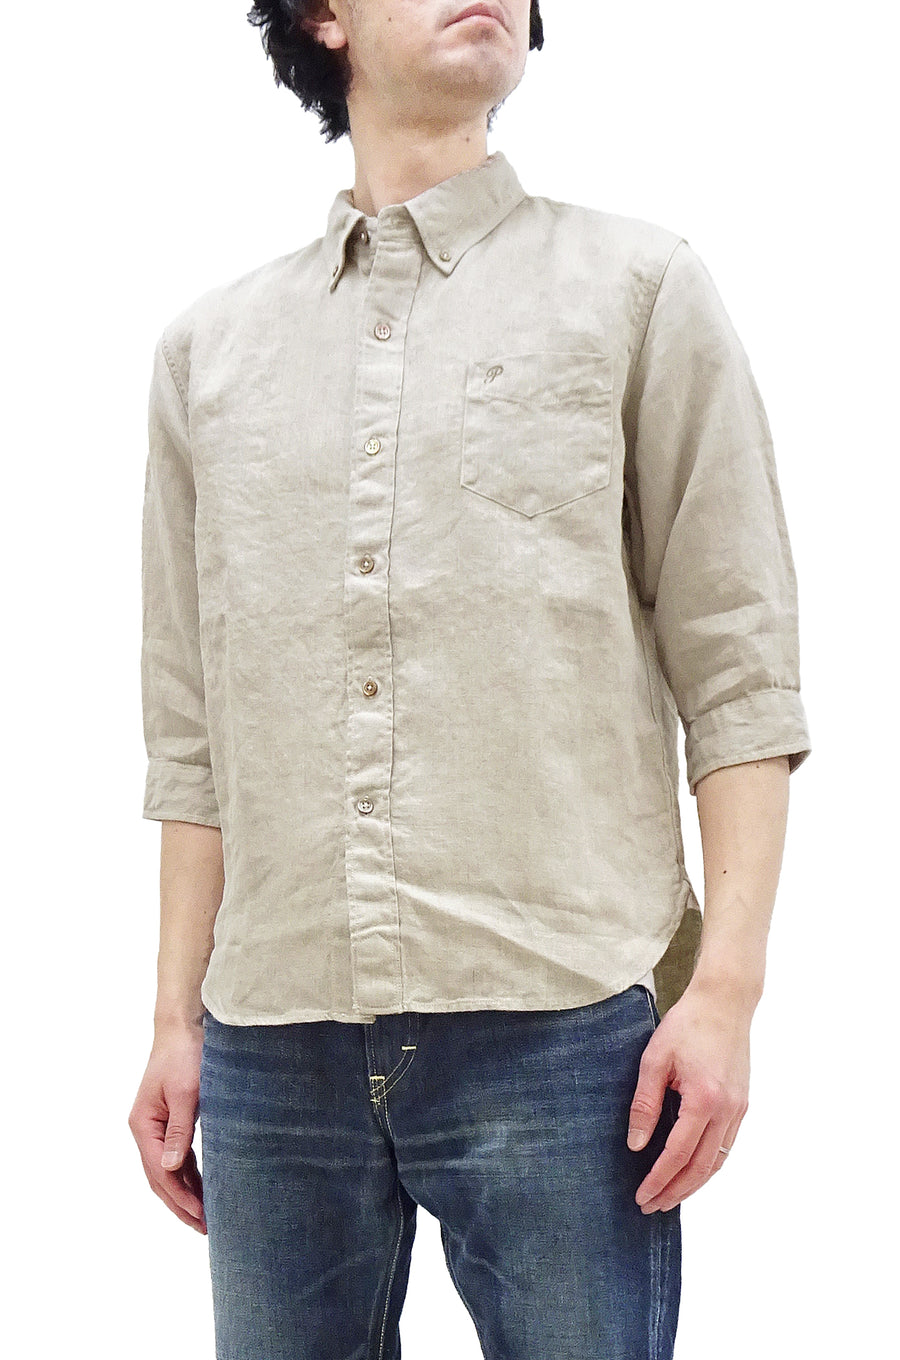 Pherrow's Men's Casual Plain 3/4 Sleeve Linen Shirt with a Button